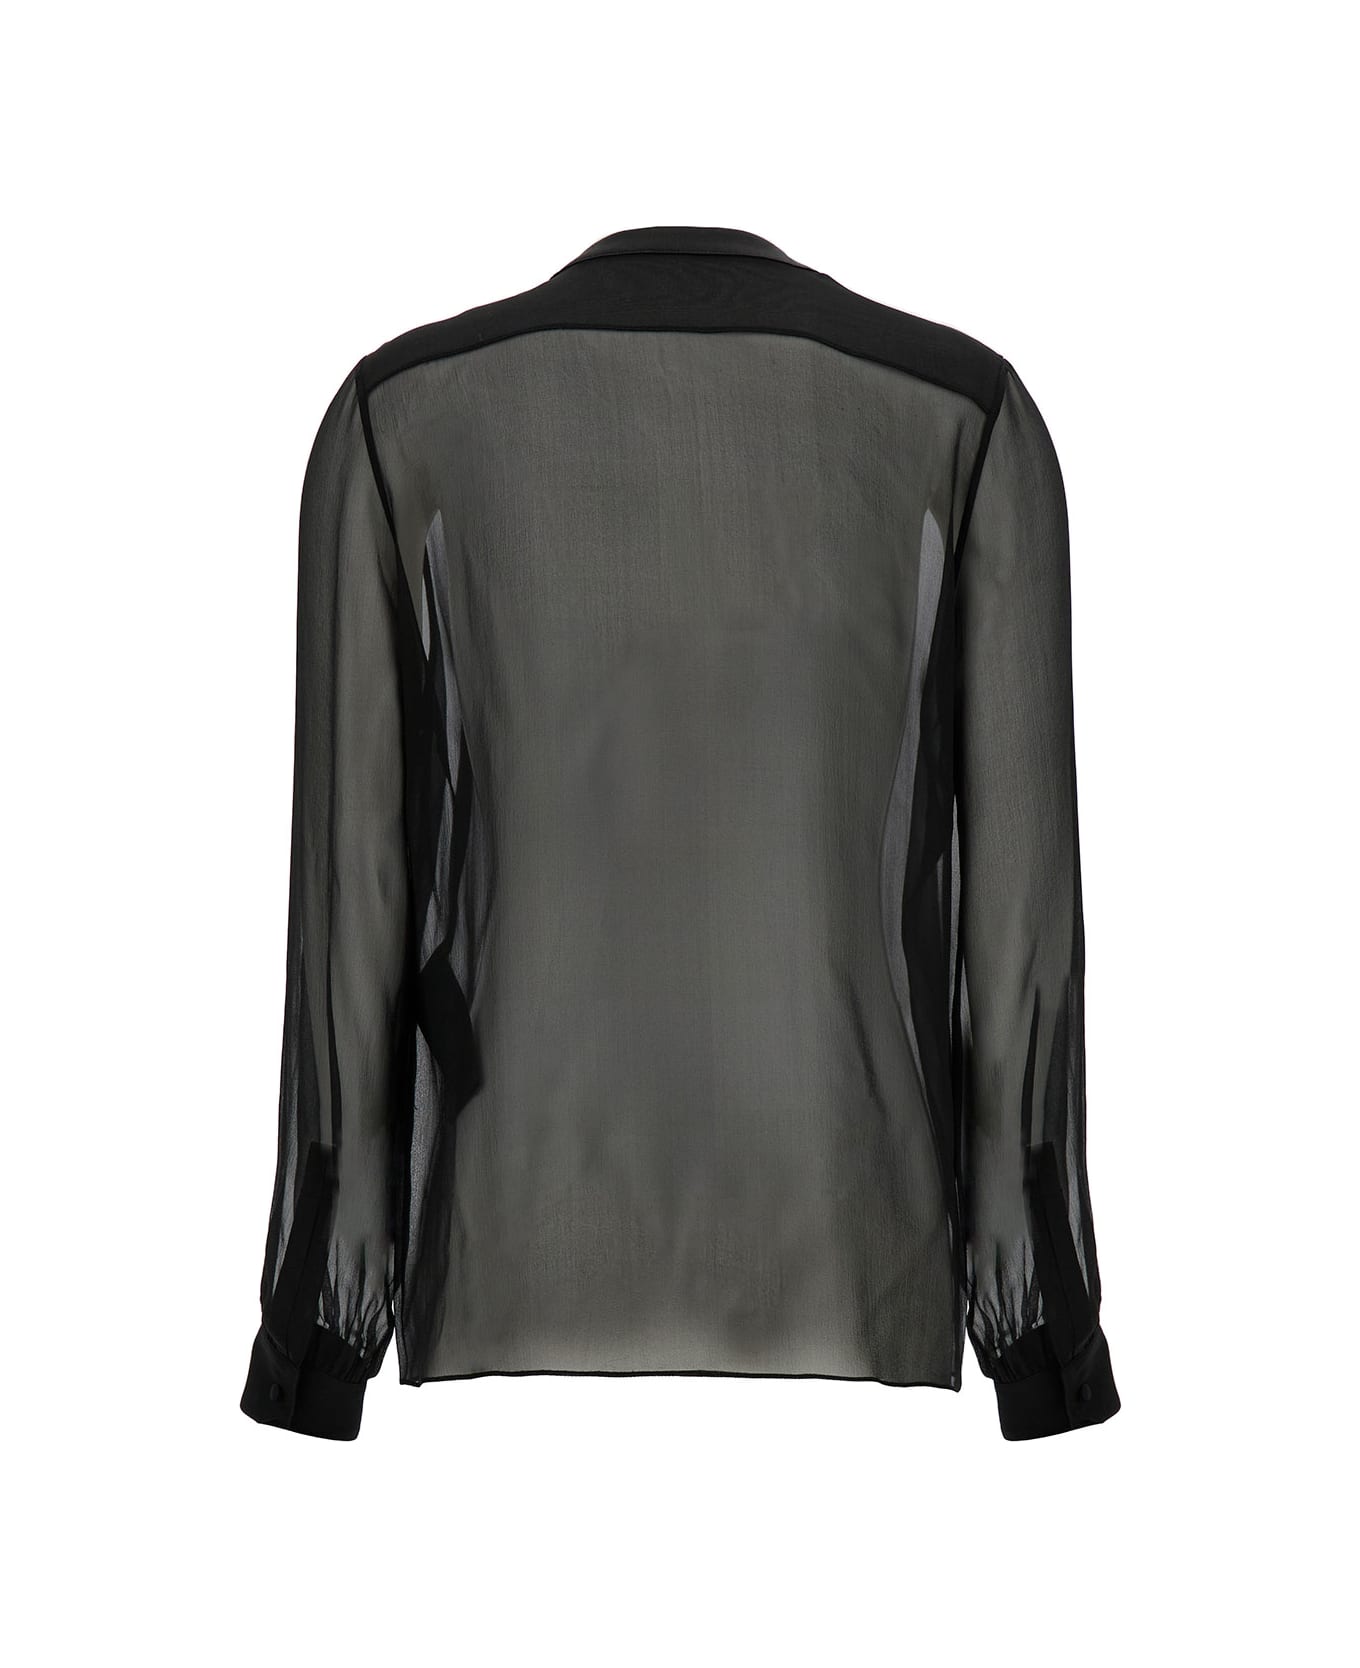 Saint Laurent Black Shirt With Bow Detail In Semi-sheer Silk Woman - Black ブラウス